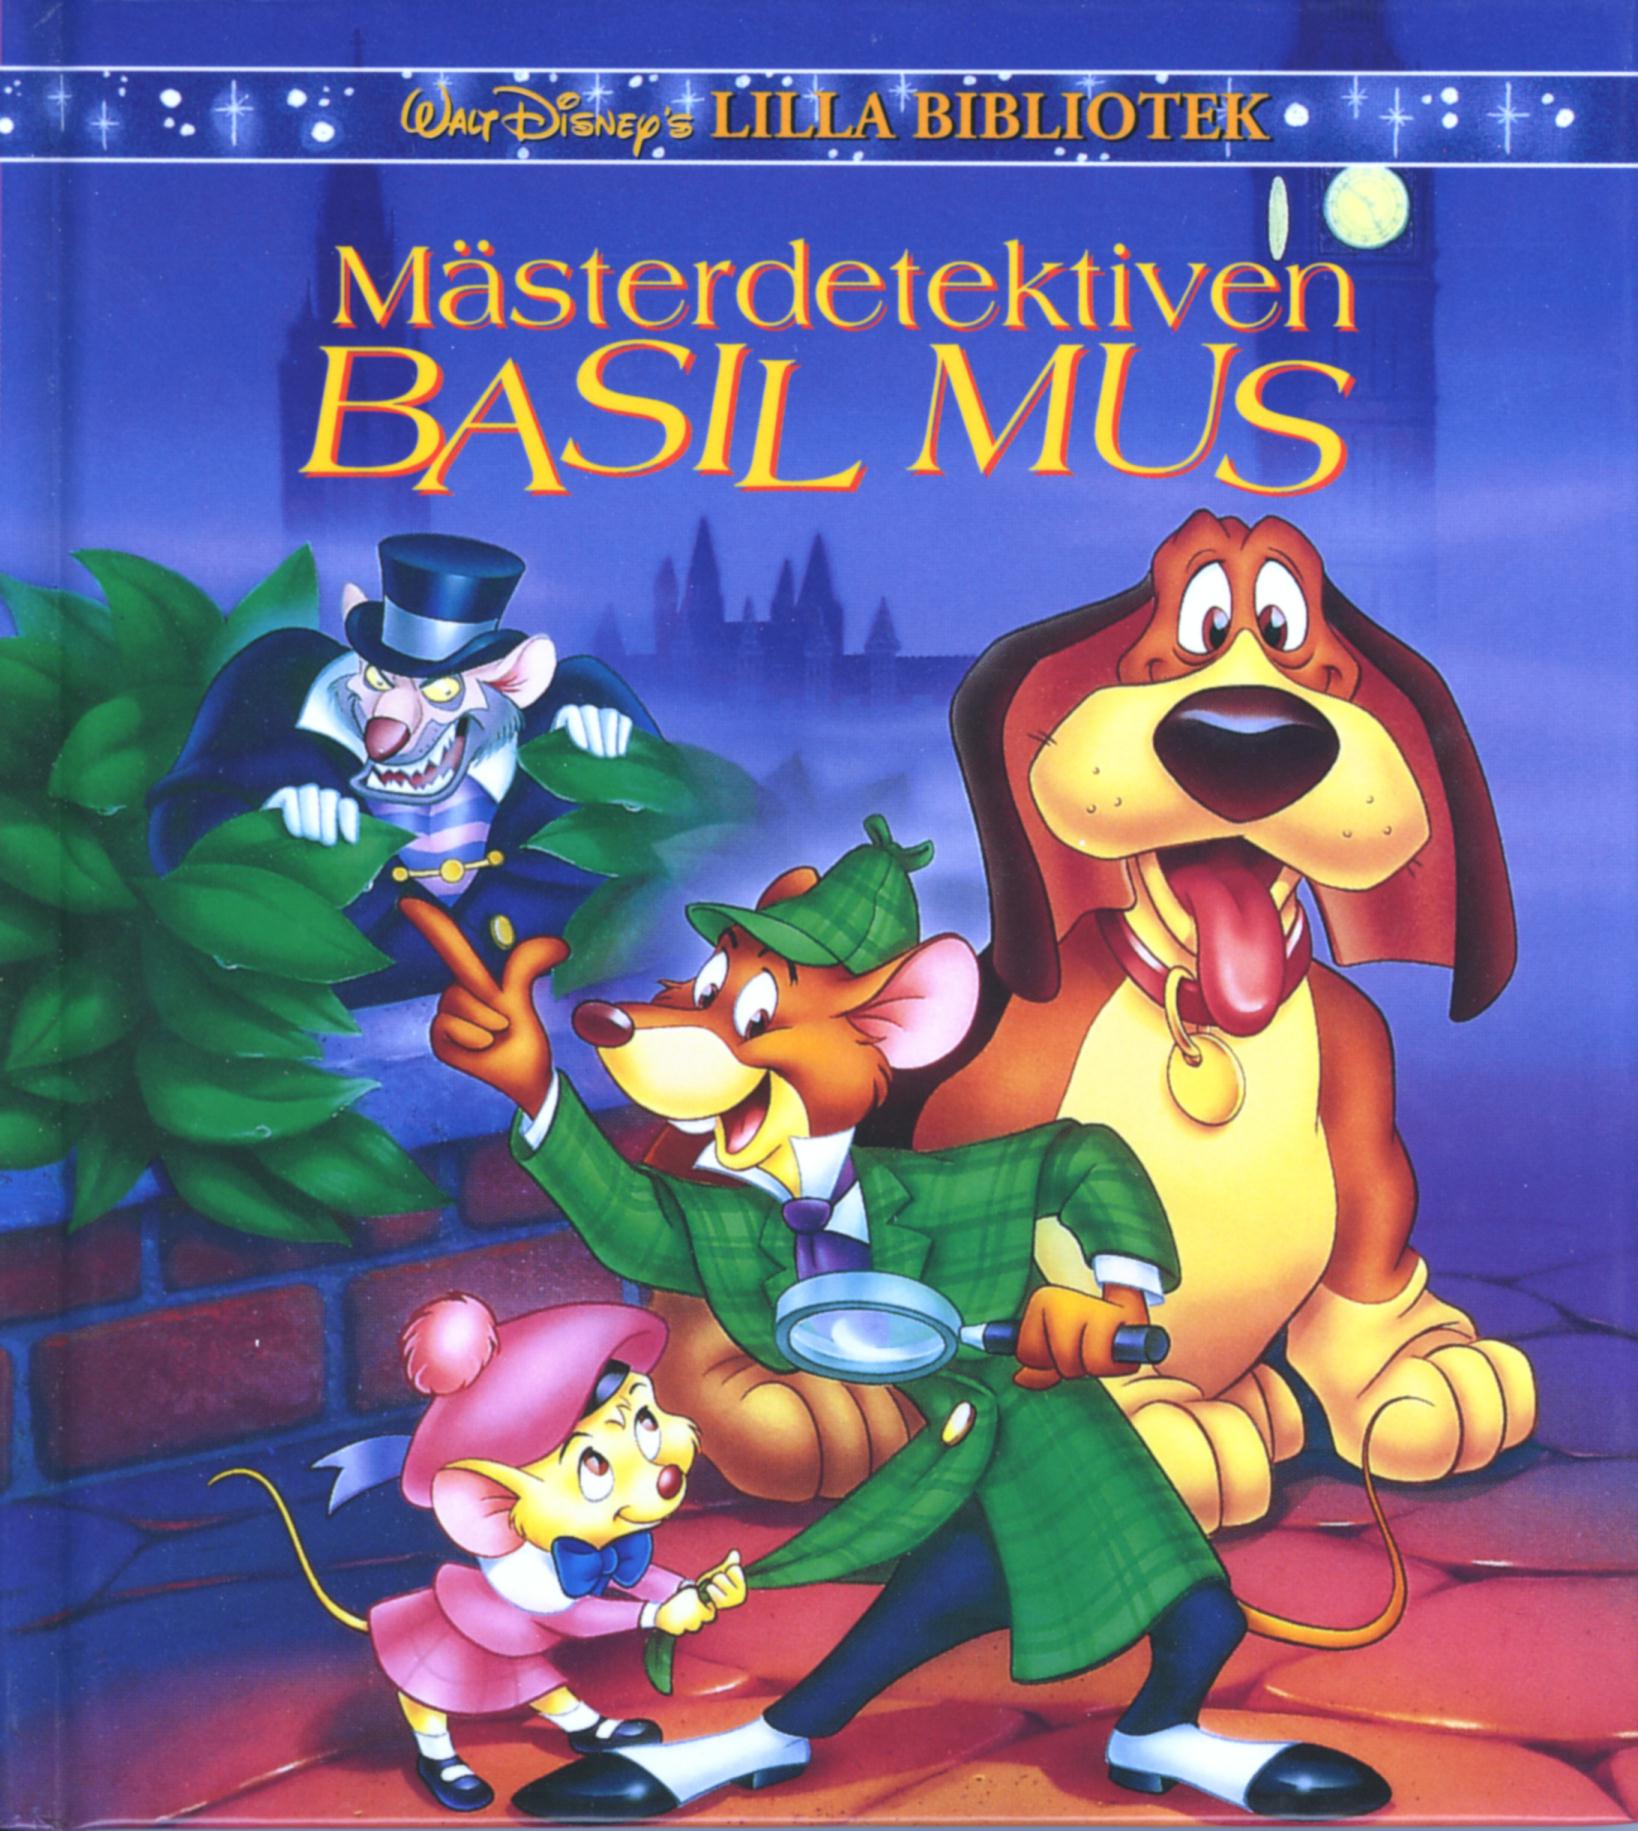 Bok om Basil mus